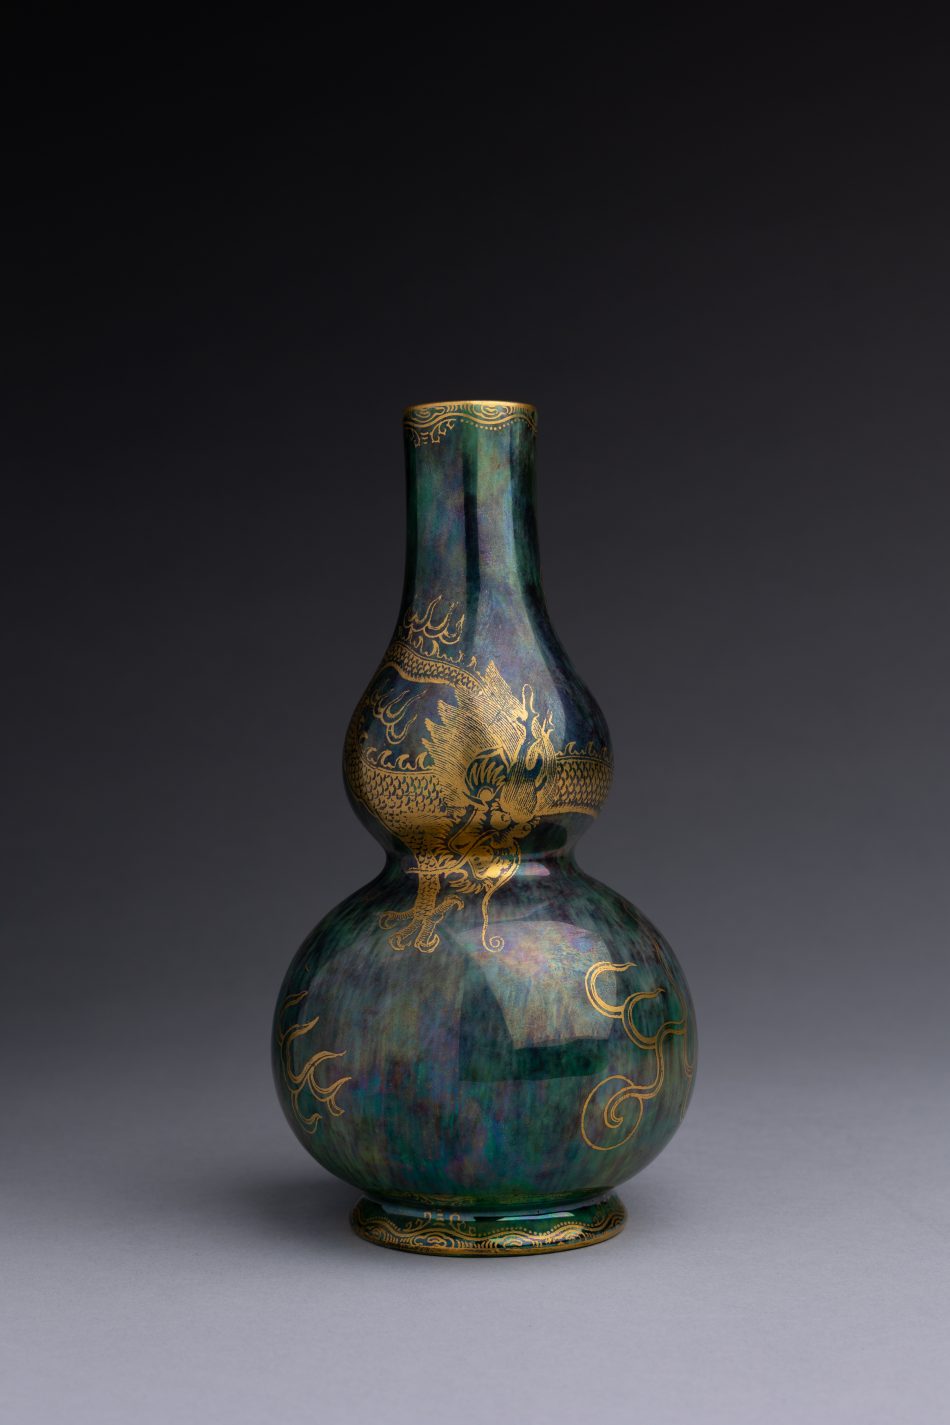 Wedgwood Dragon Lustre Vase